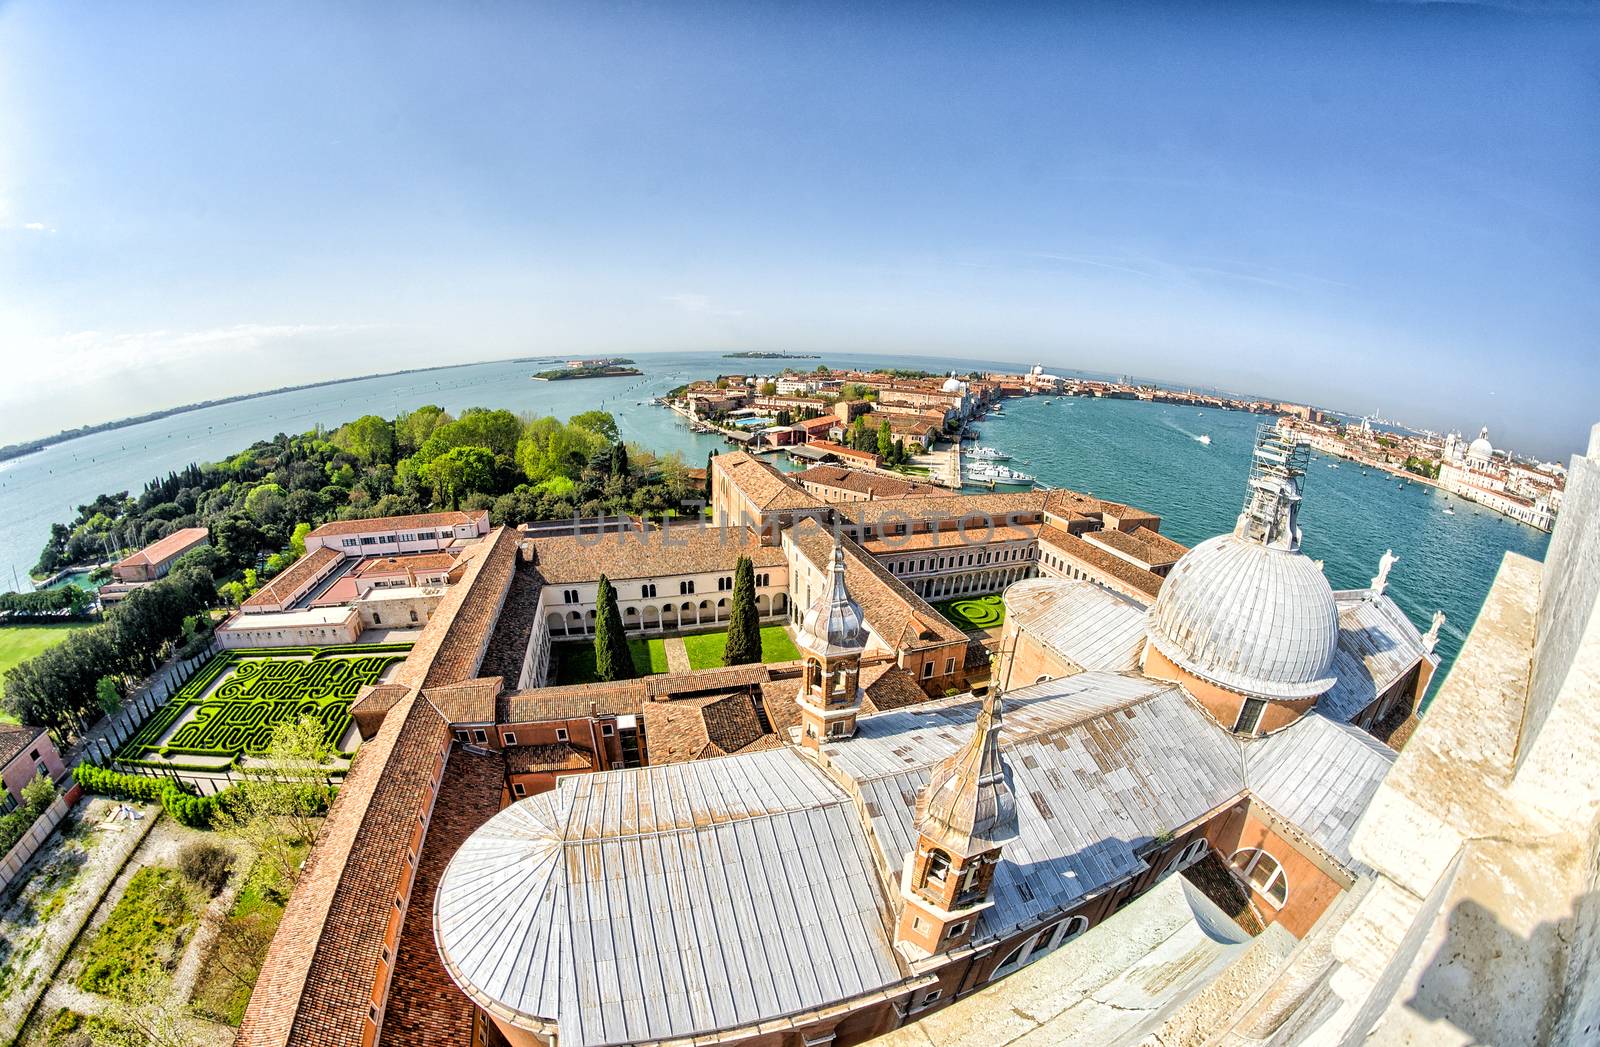 View of Venice from Basilica Santa Maria della Salute by jovannig